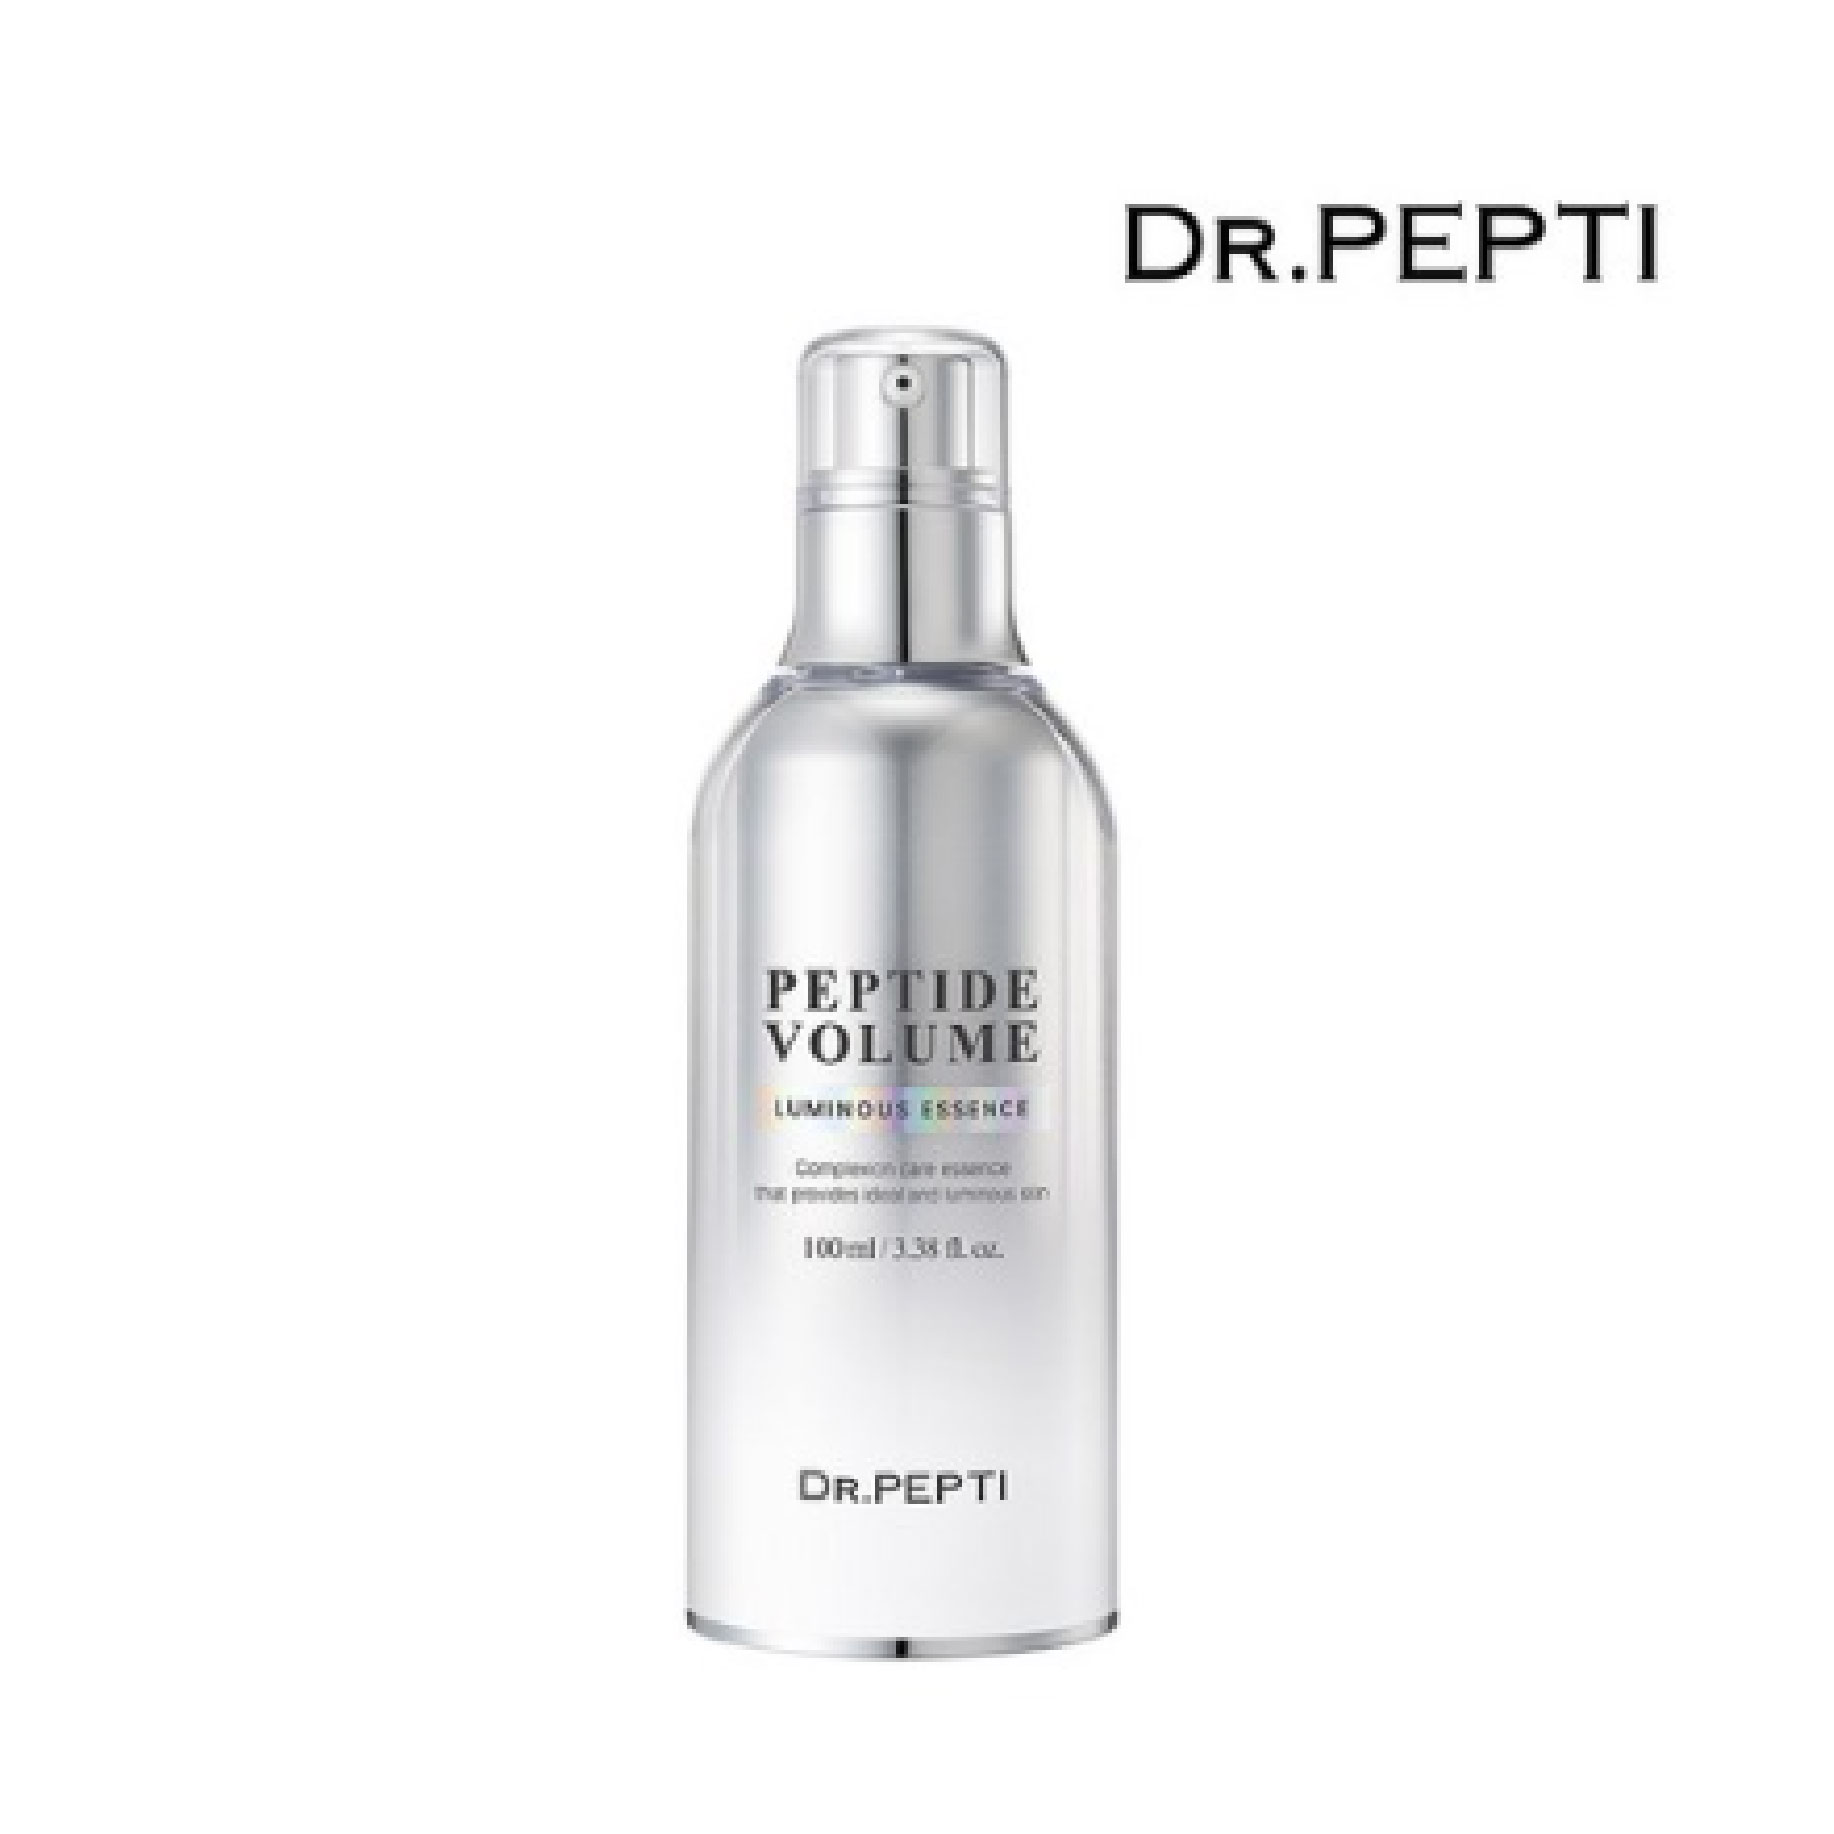 DR. PEPTI Peptide Volume Luminous Essence - OYM | 韓國美容新體驗！